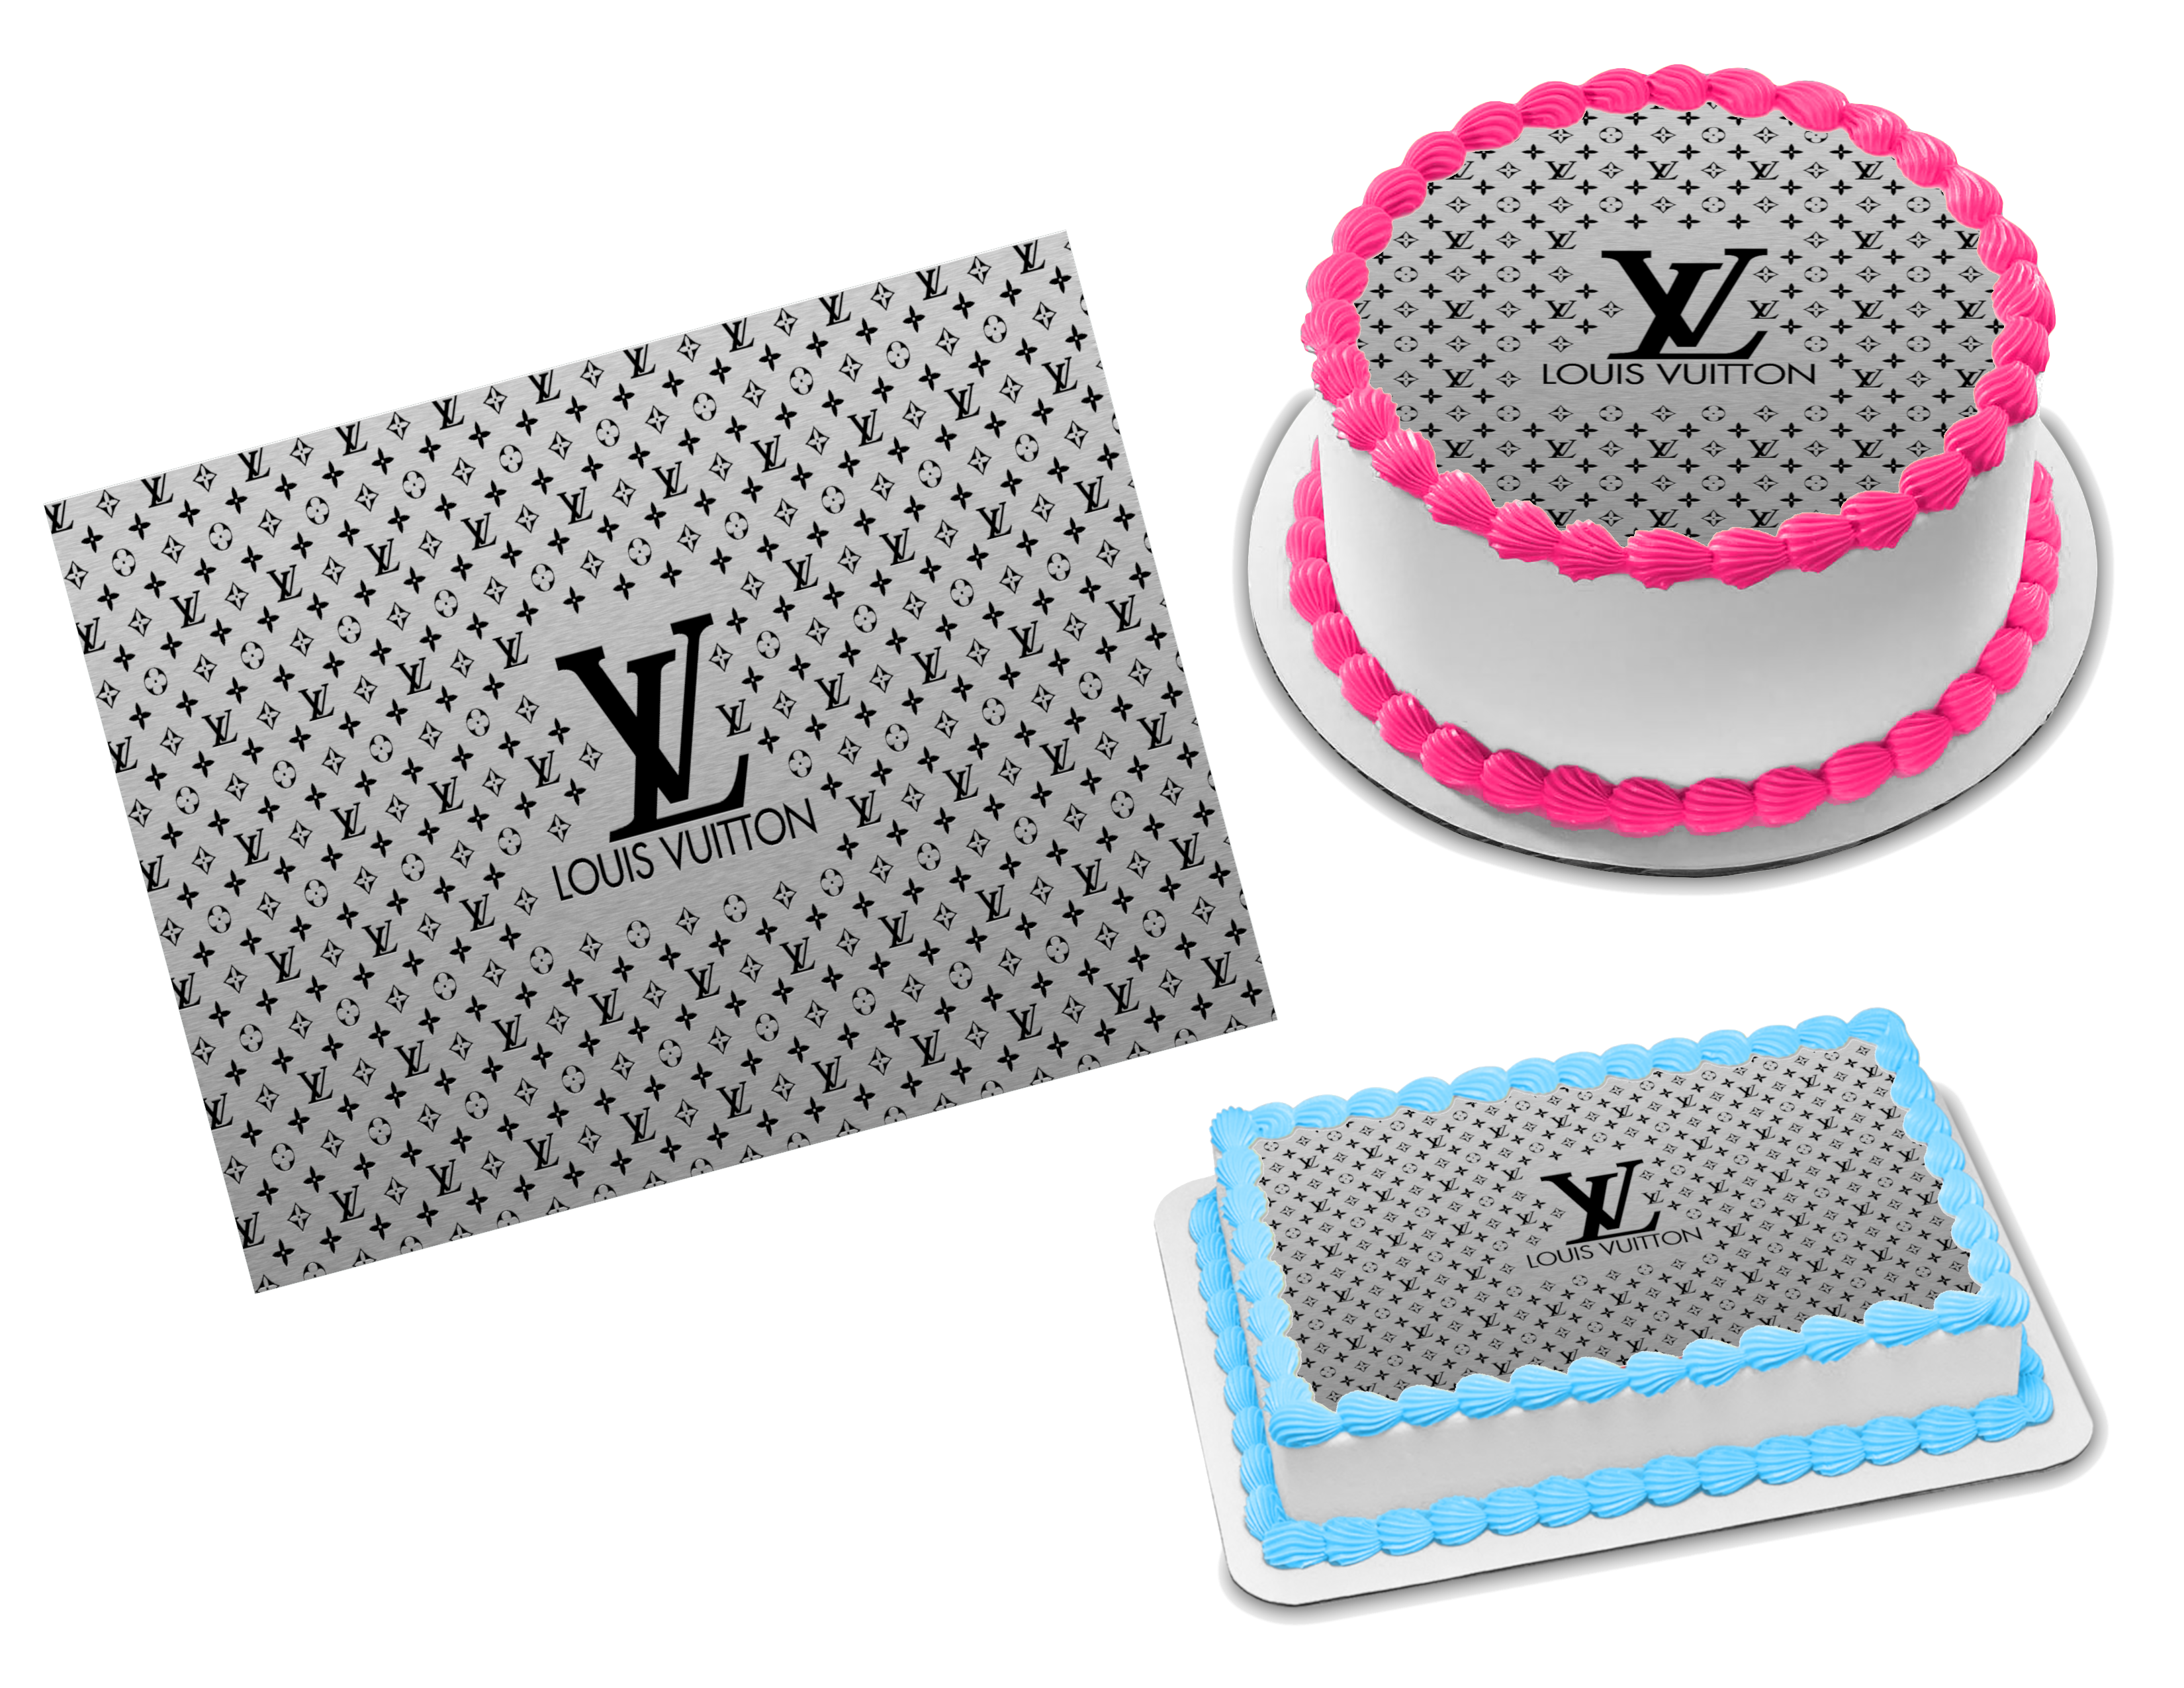 Louis Vuitton Pull-Money Surprise Cake Cake Size: 8 diameter x 4